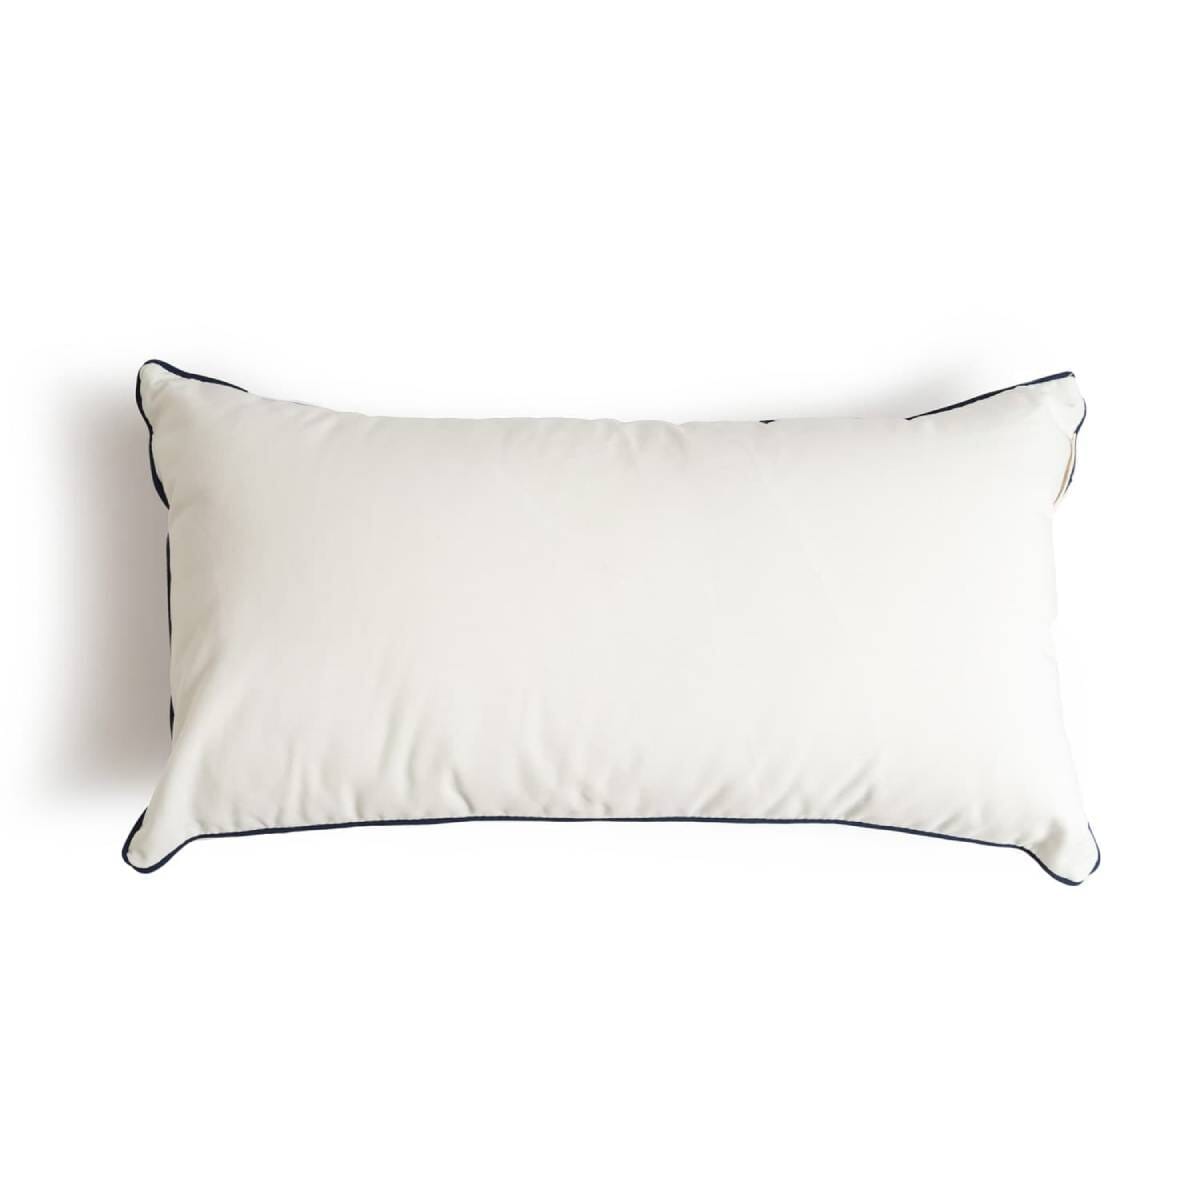 The Rectangle Throw Pillow - Rivie White Rectangle Throw Pillow Business & Pleasure Co Aus 